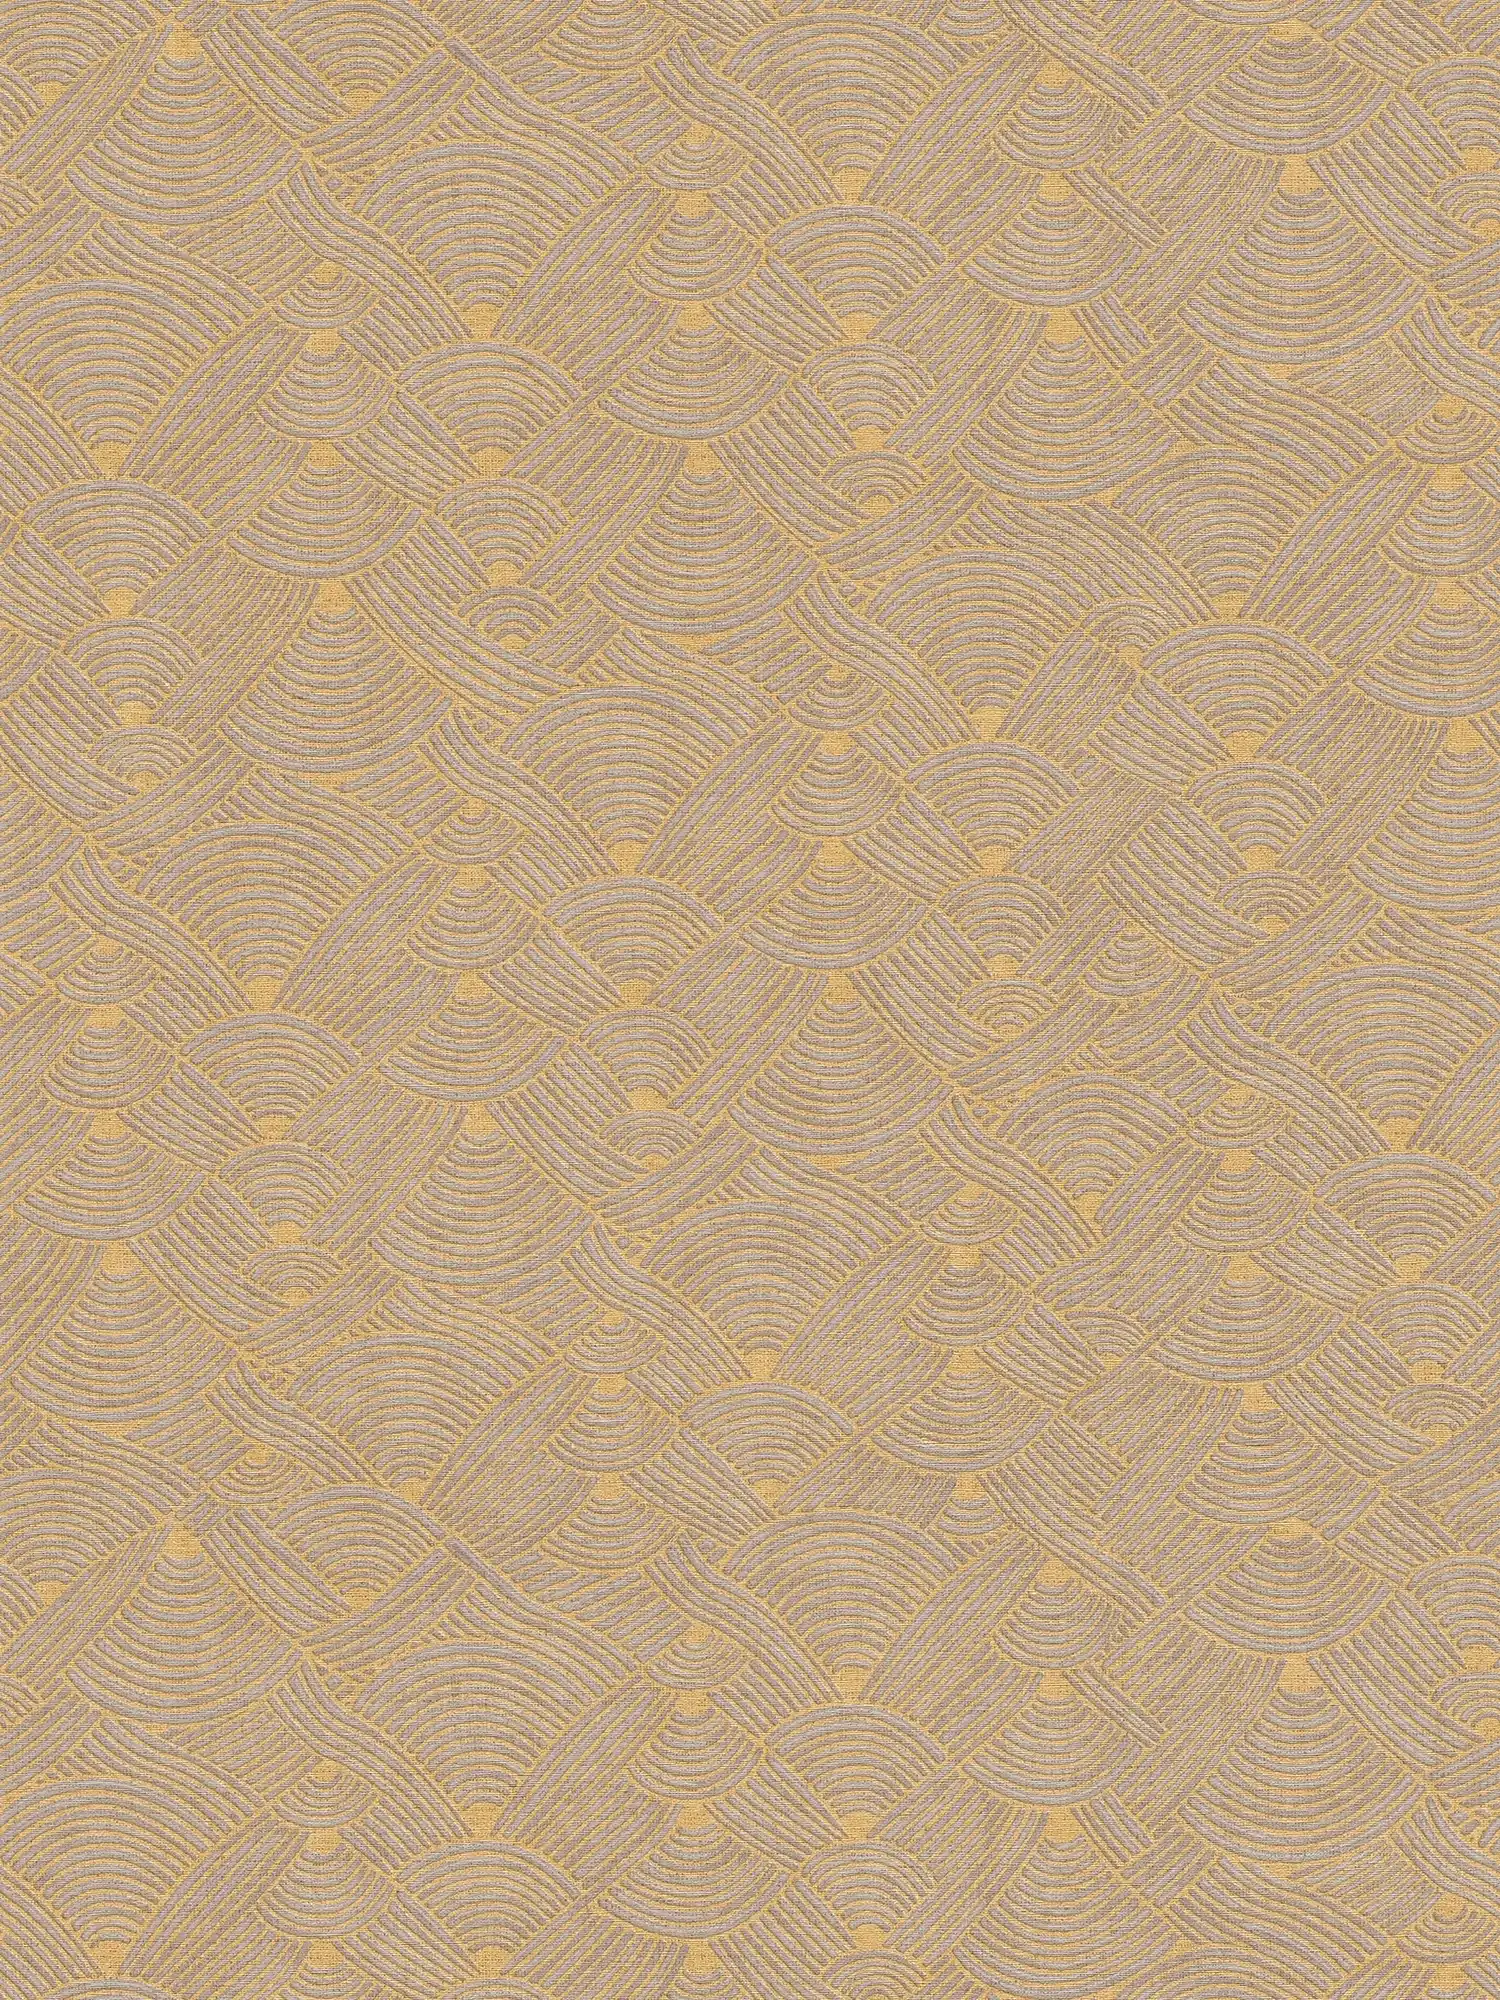 Wallpaper ethnic design with braided design - beige, yellow
